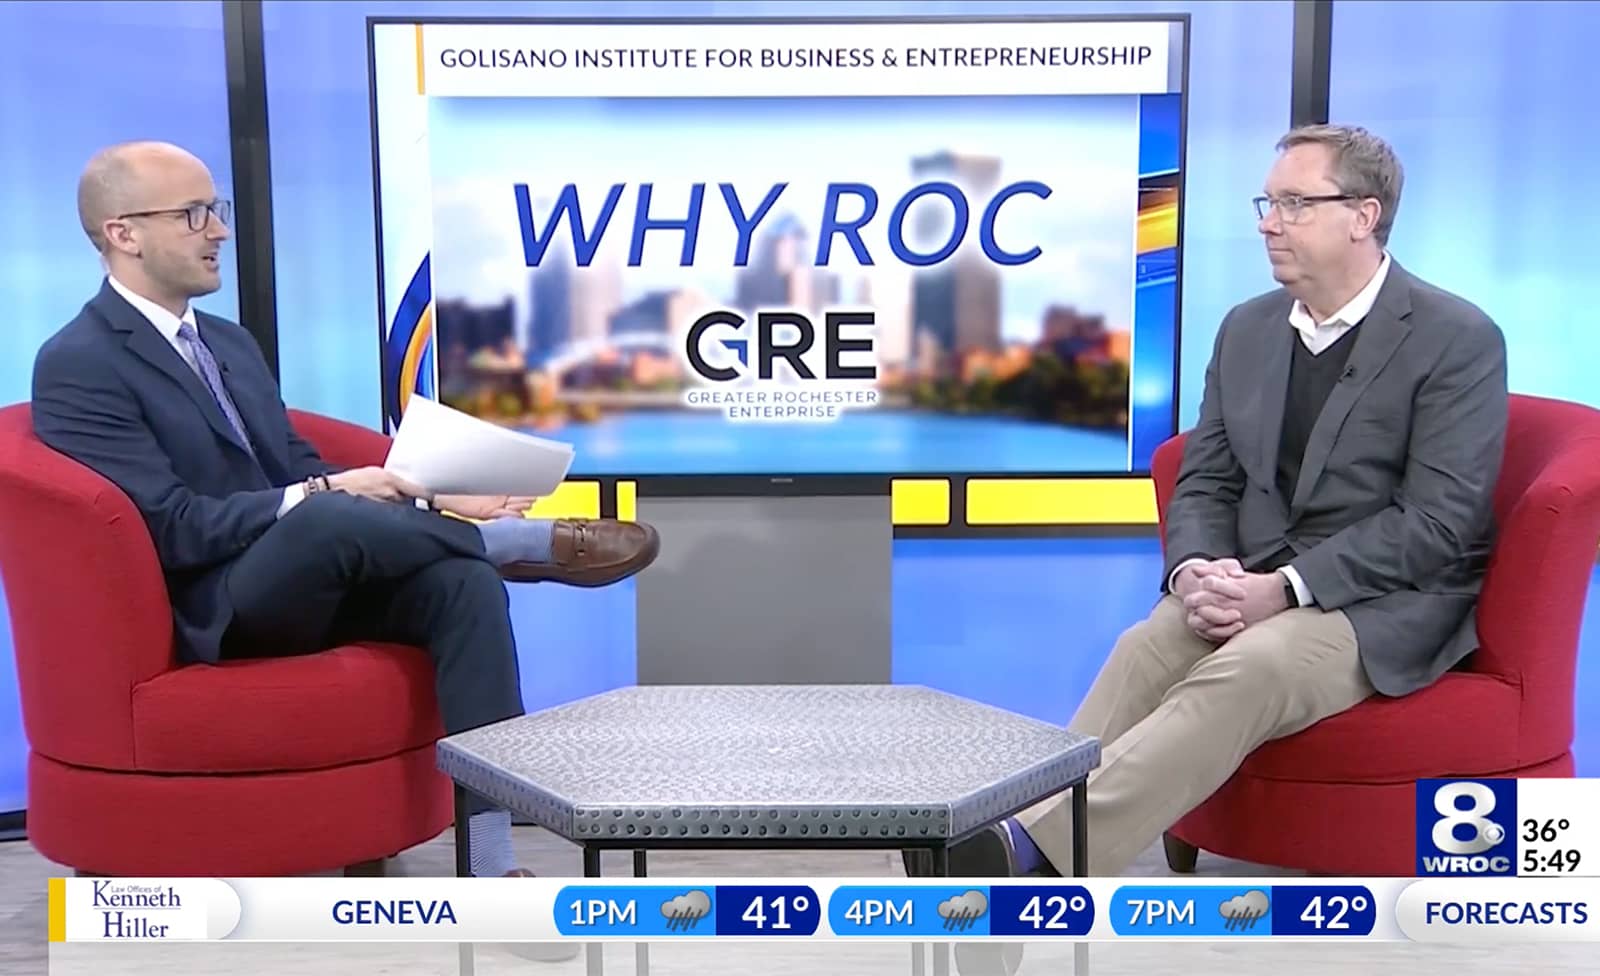 WHY ROC: Golisano Institute for Business and Entrepreneurship